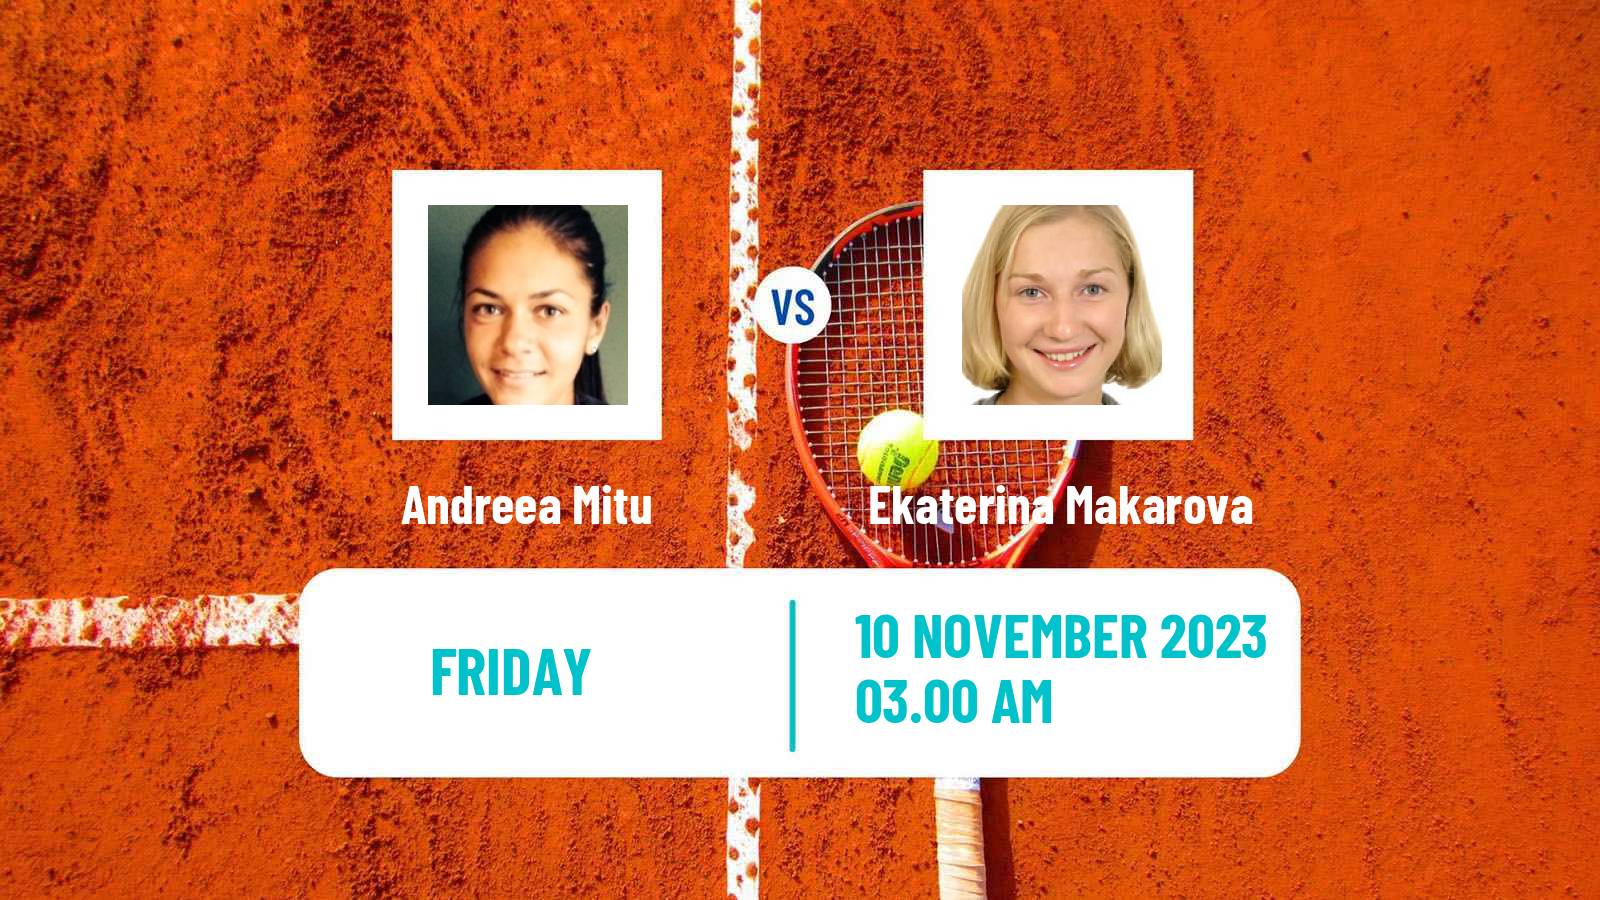 Tennis ITF W40 Heraklion 2 Women Andreea Mitu - Ekaterina Makarova